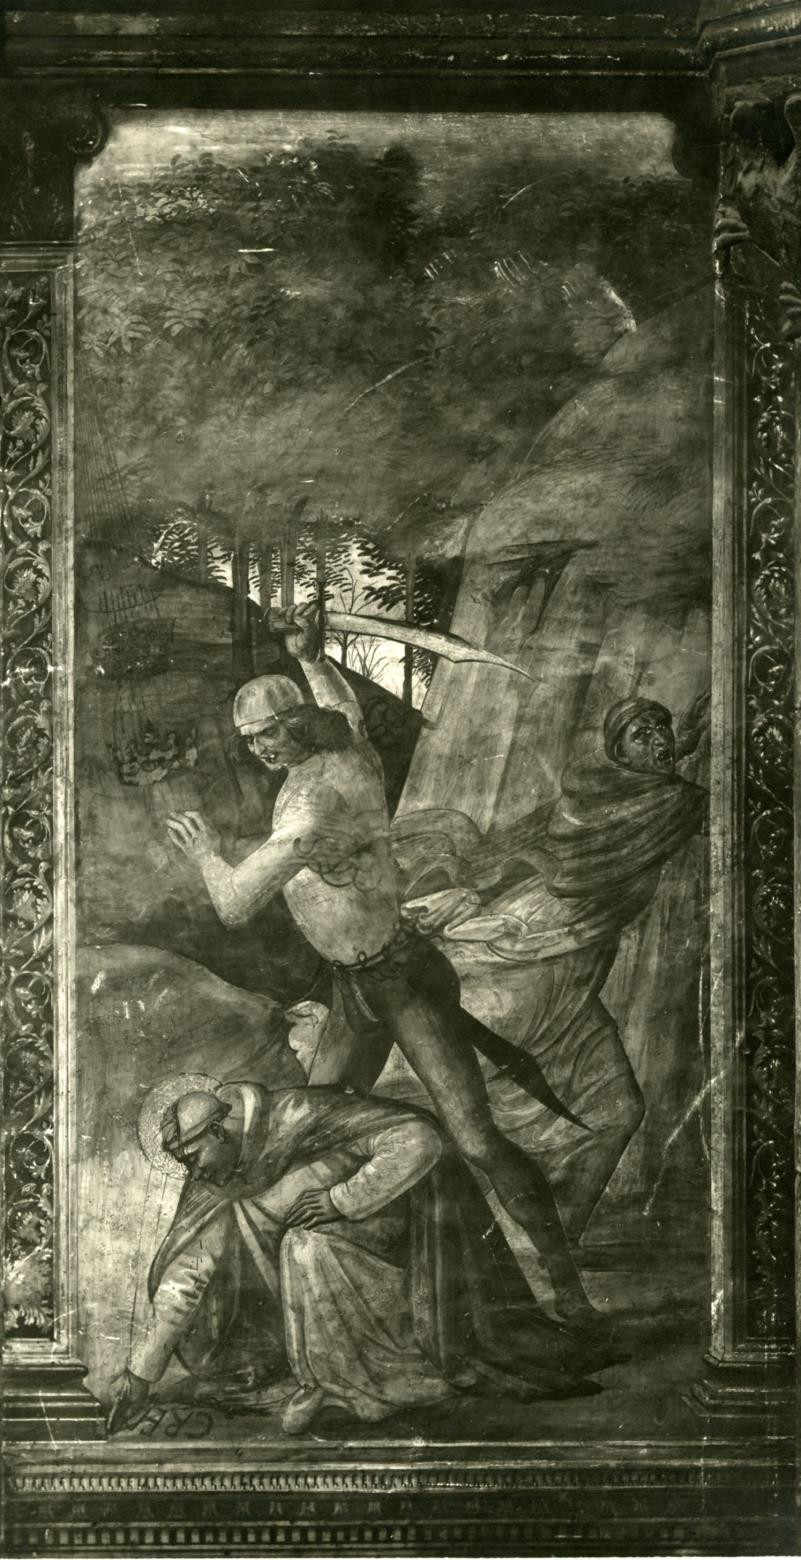 Plate 36: Domenico Bigordi called Ghirlandaio, and workshop, Martyrdom of St.